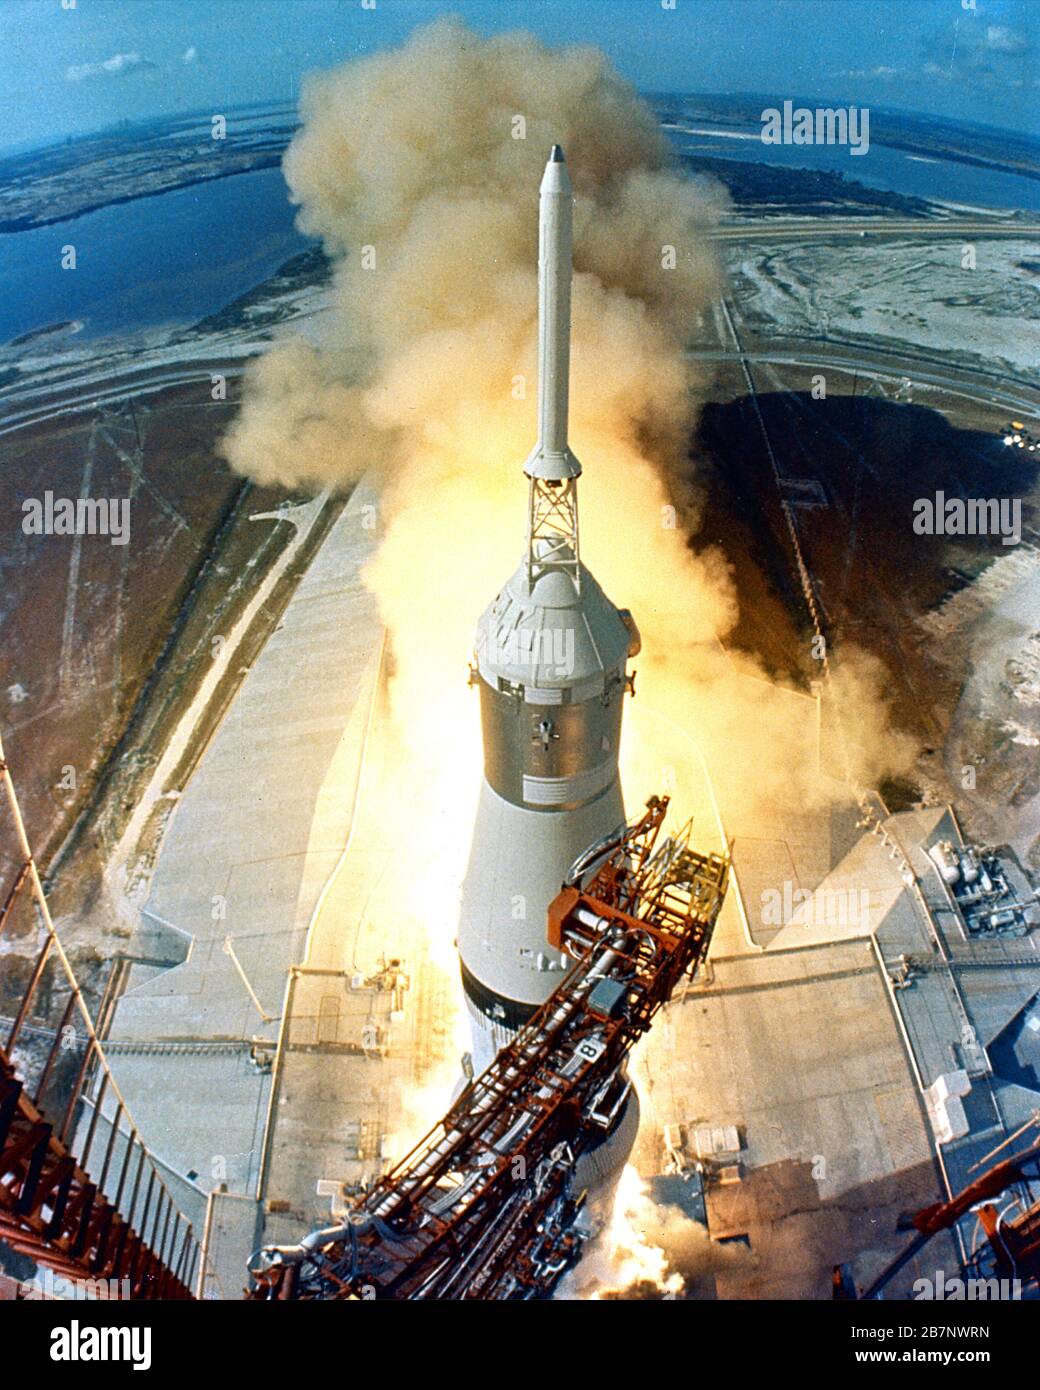 Apollo 11 Nasa 1969 A Saturn V Rocket Launches The Apollo 11 Crew On The First Moon Landing